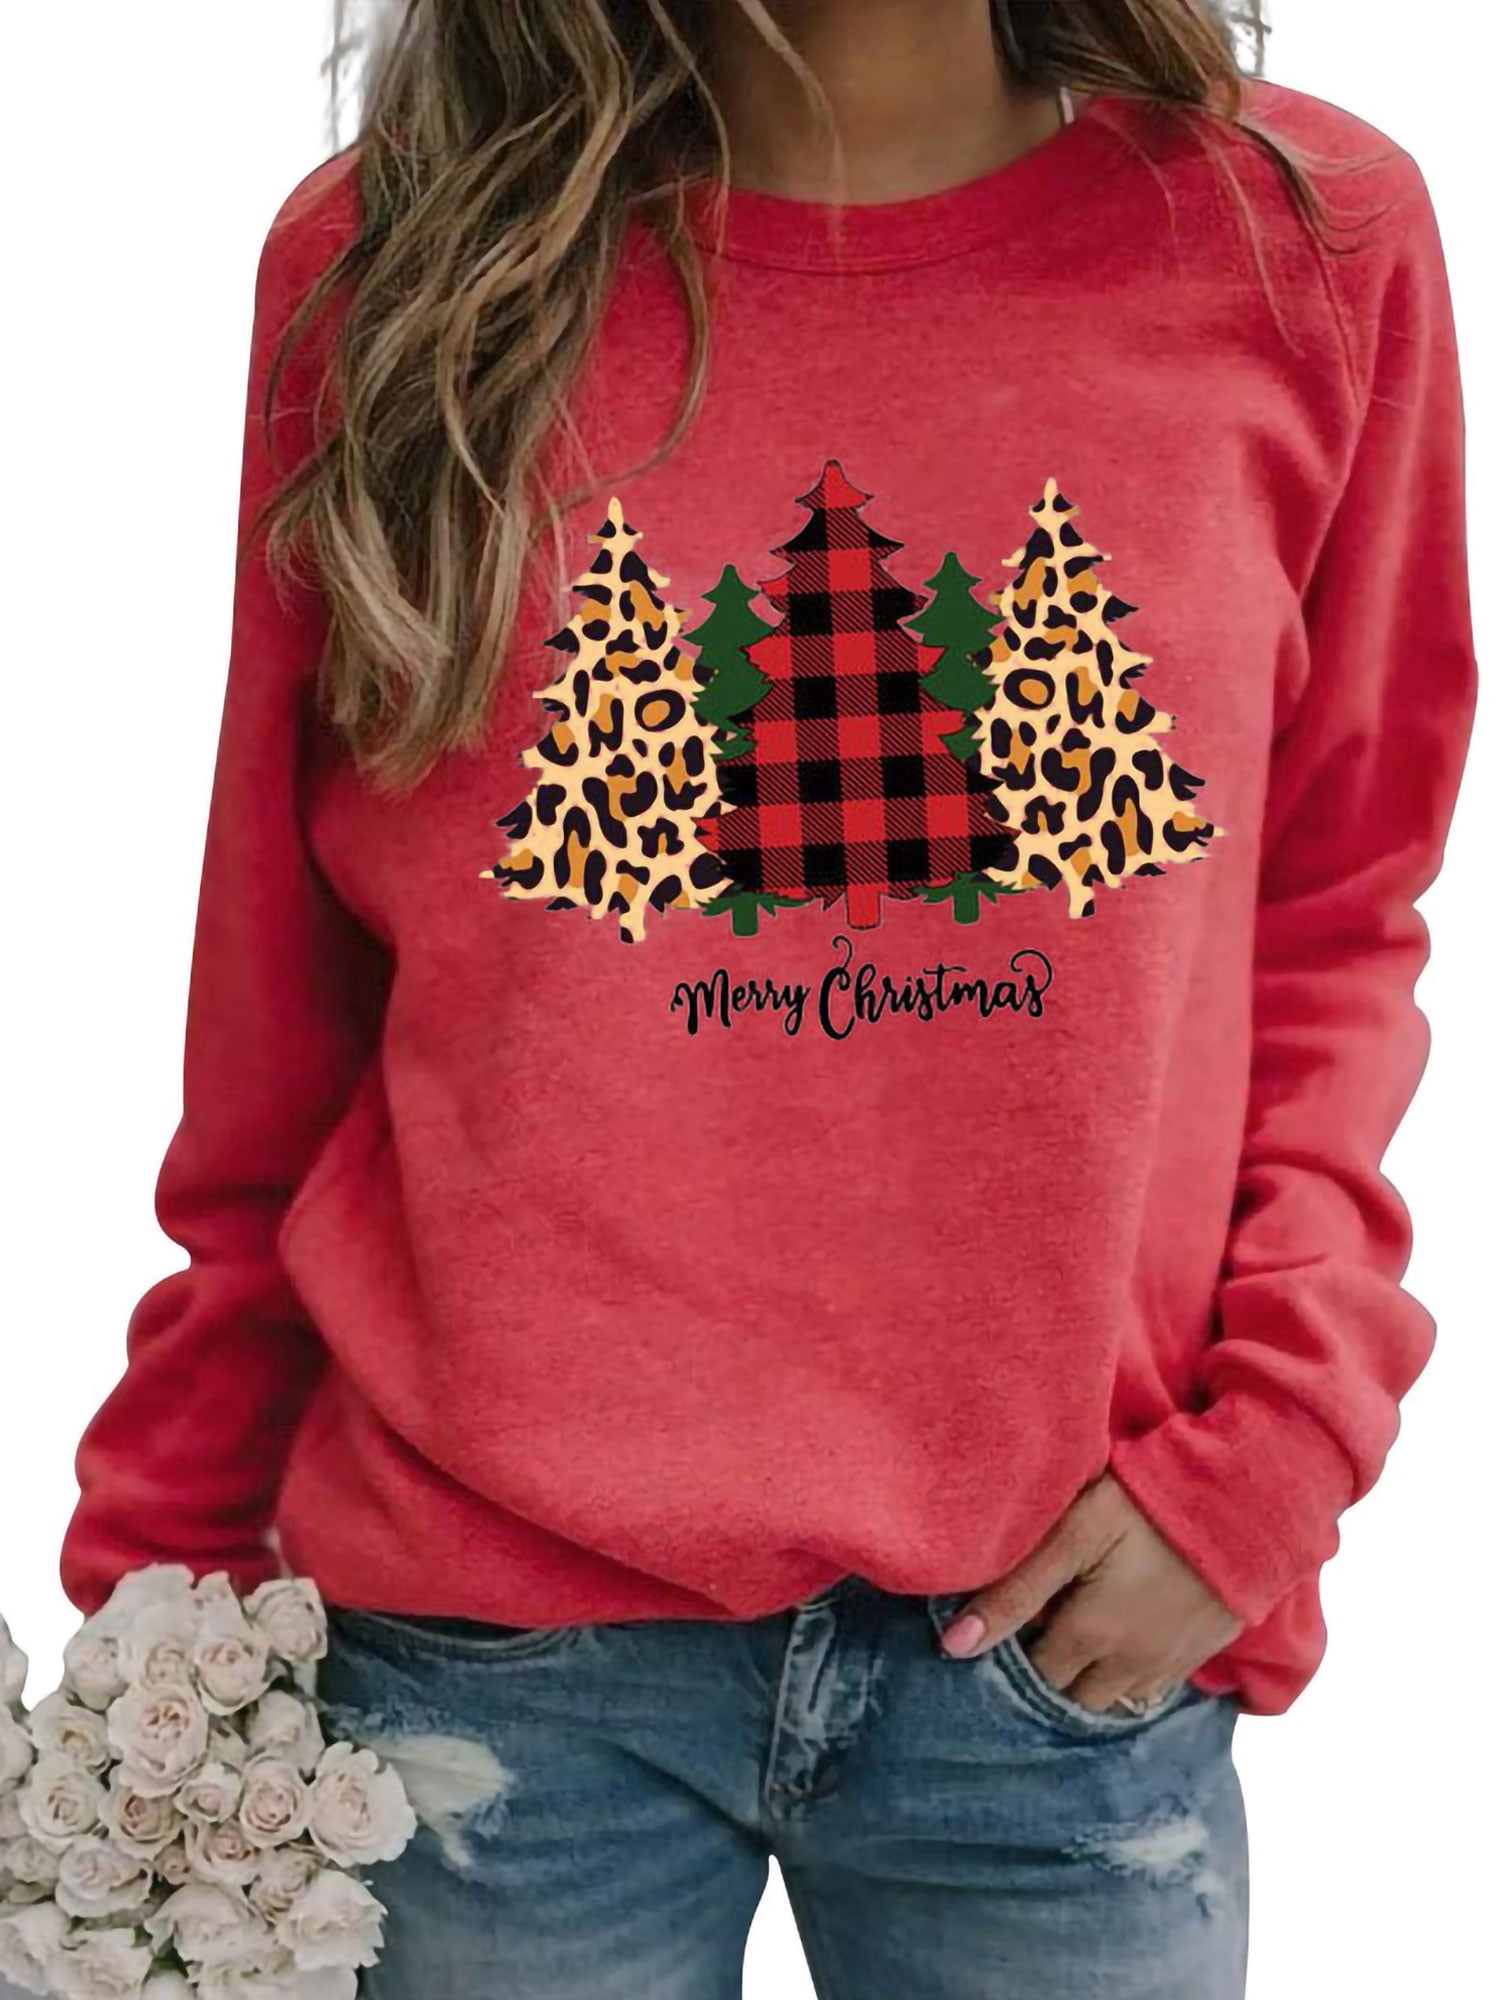 Merry Christmas Tree  Sweatshirt/Longsleeved Tshirt   Sizes/Colors